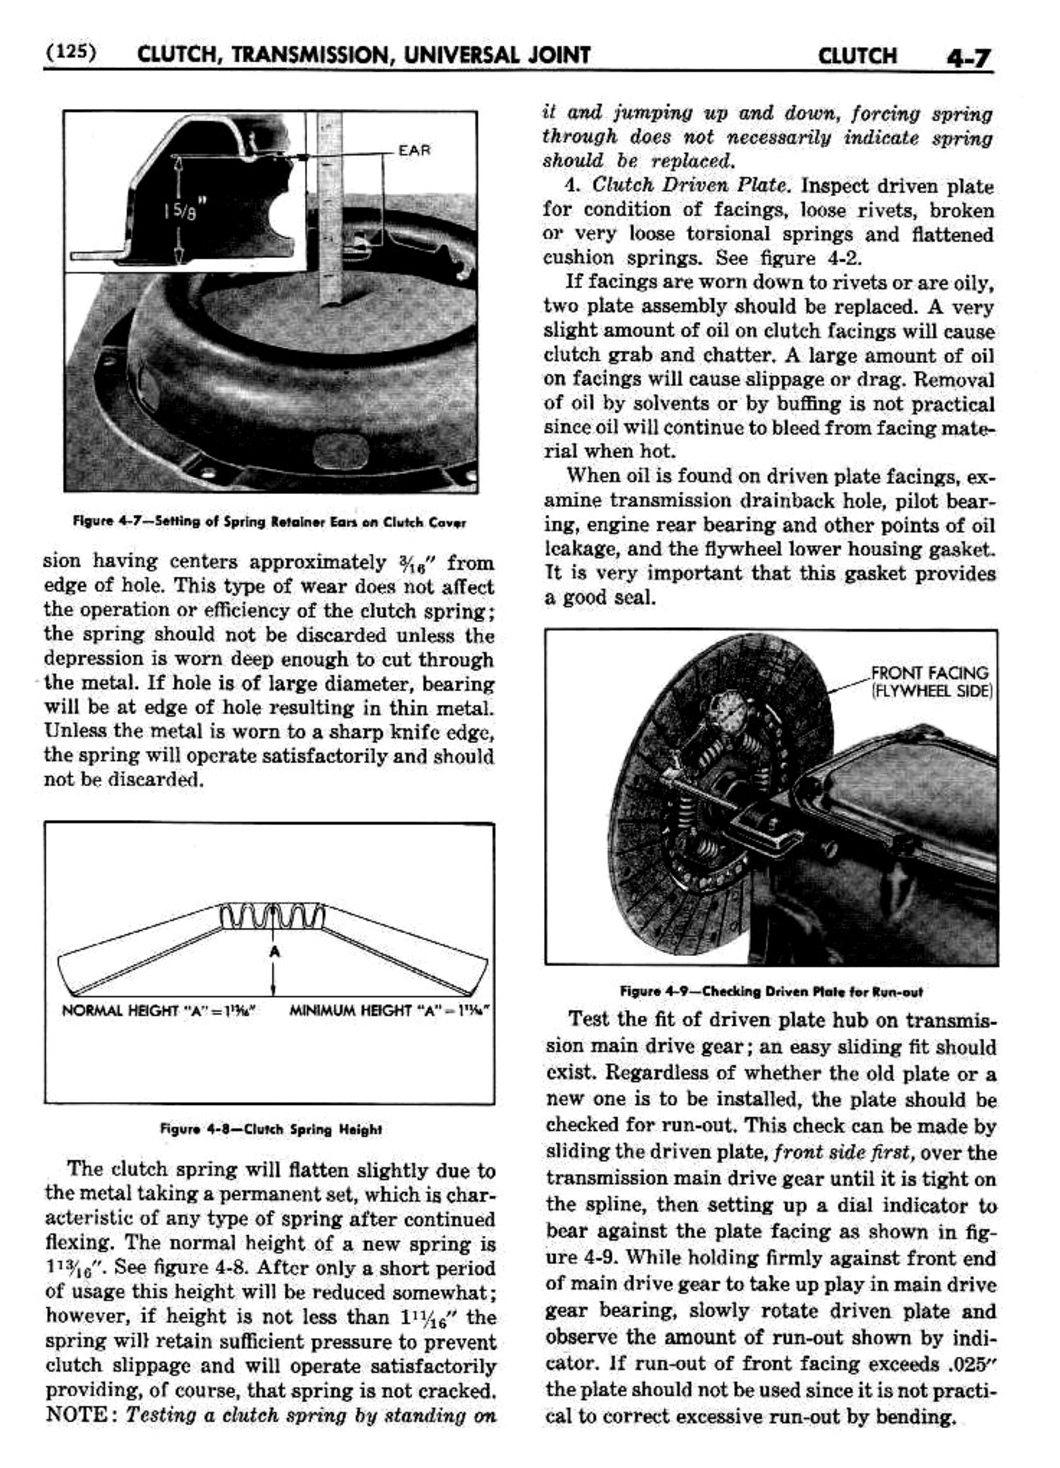 n_05 1951 Buick Shop Manual - Transmission-007-007.jpg